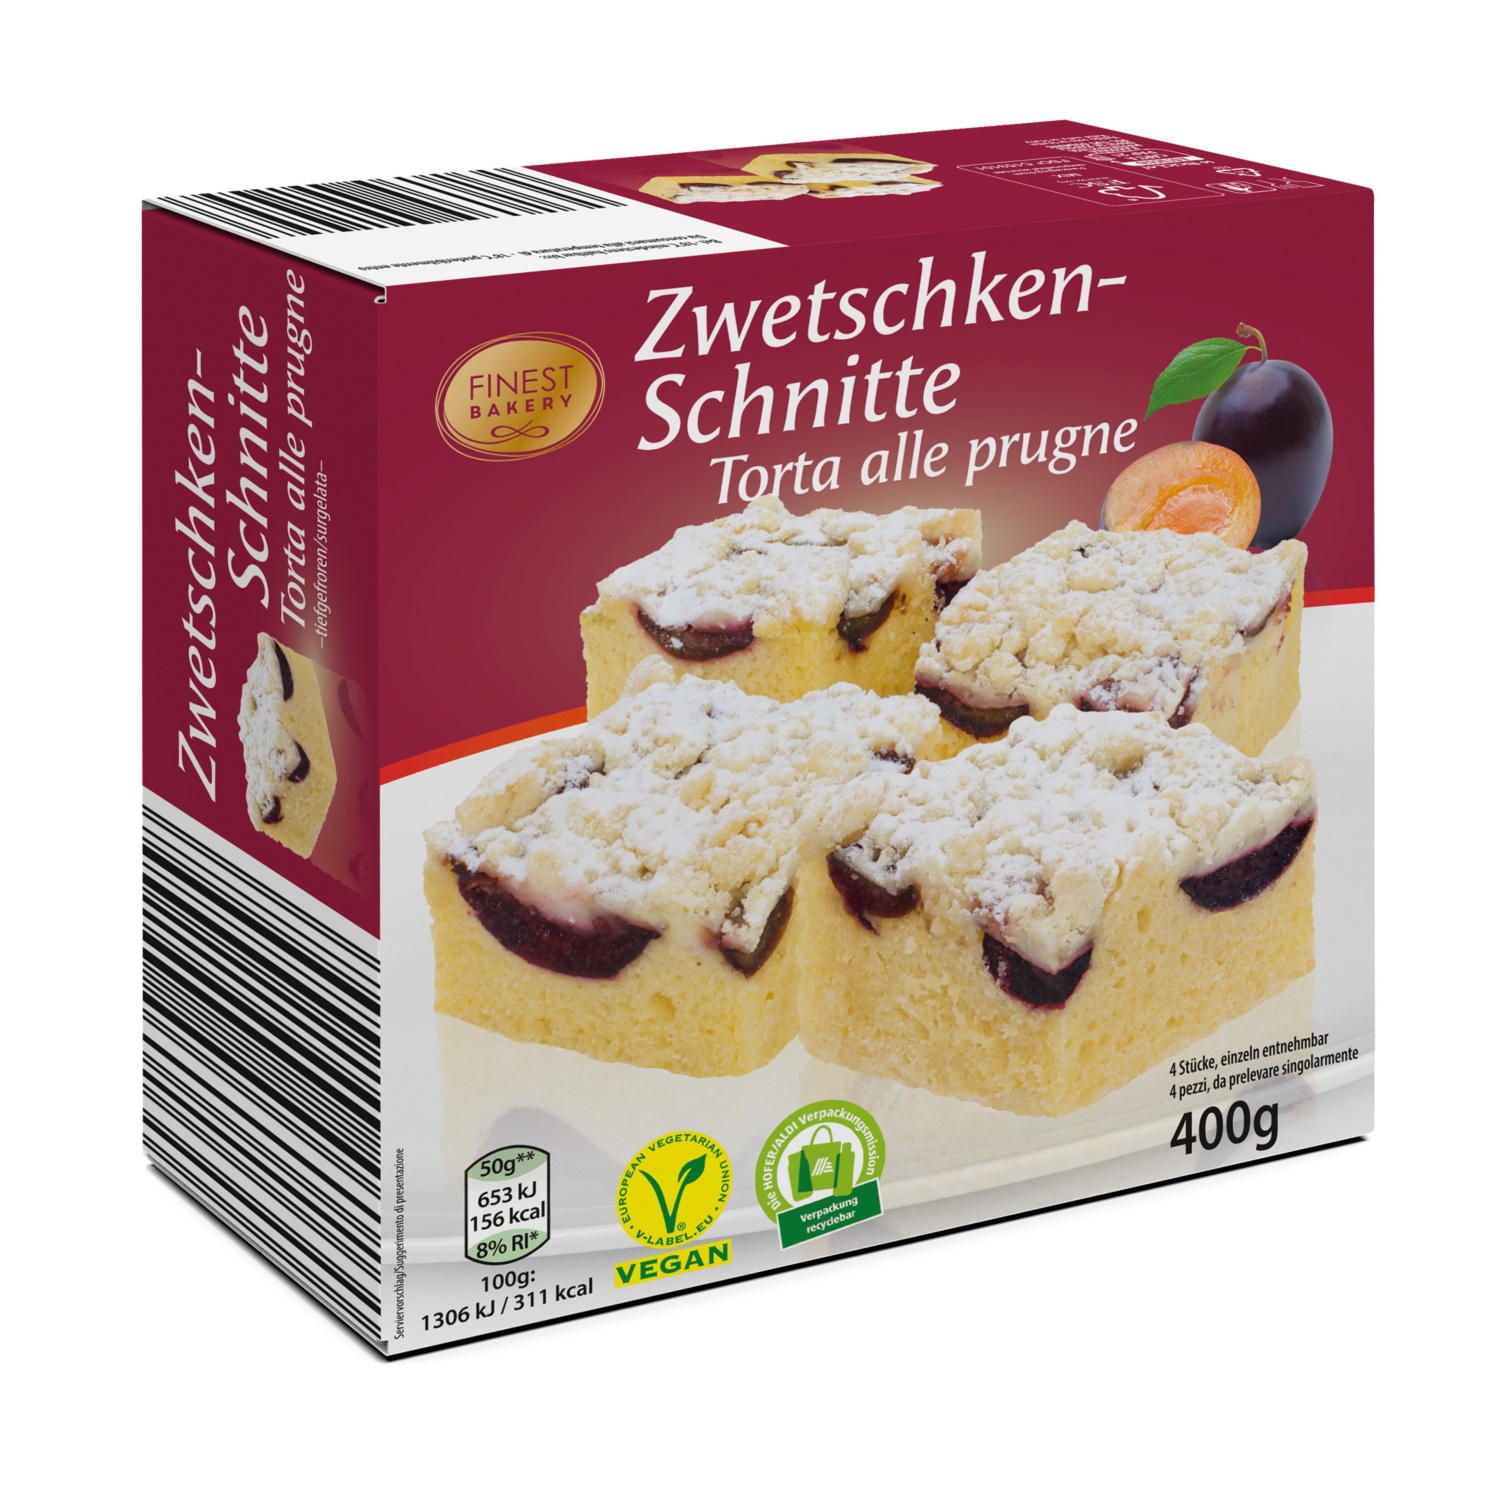 FINEST BAKERY Vegane Kuchenschnitten, Zwetschke